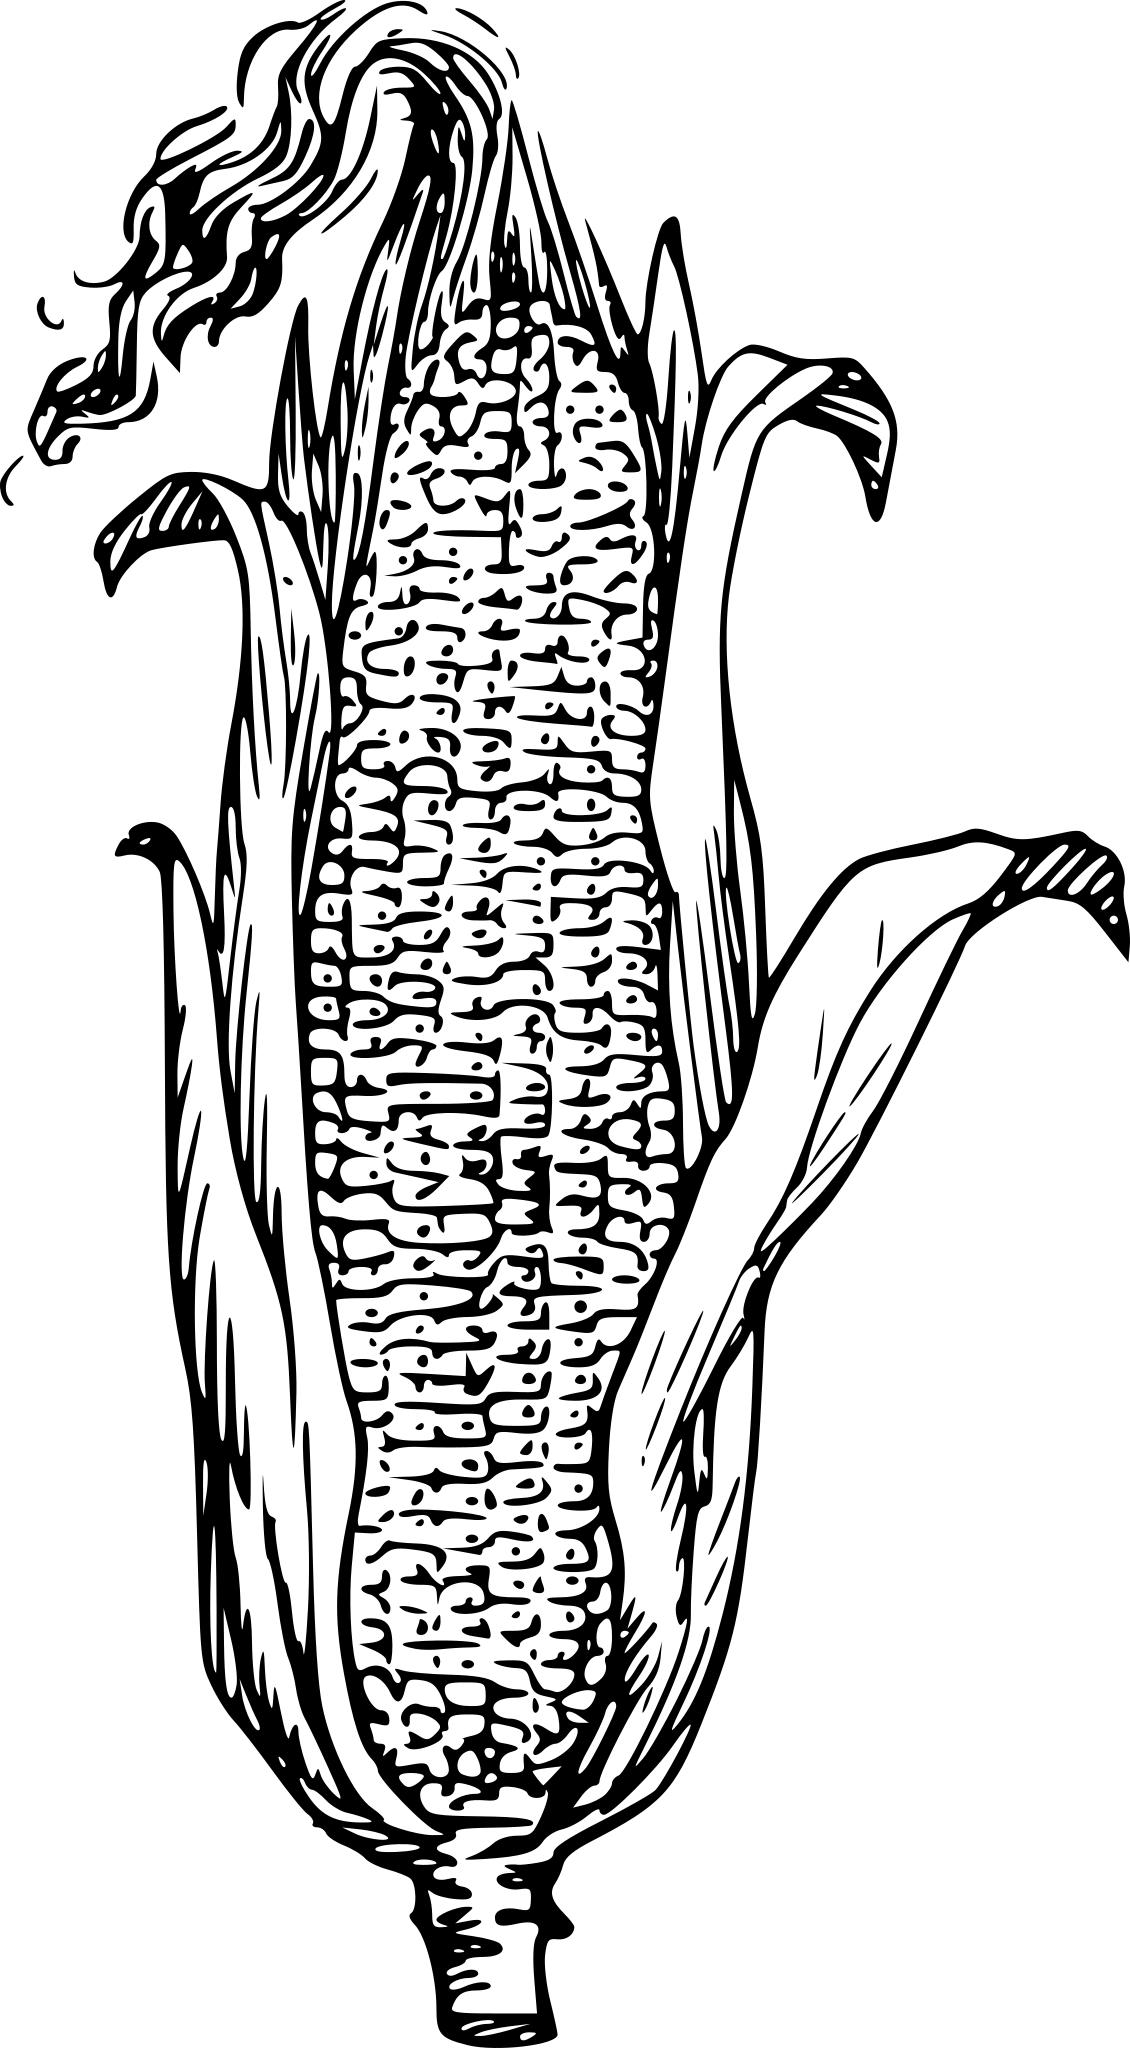 Столбики с рыльцами кукурузы рисунок